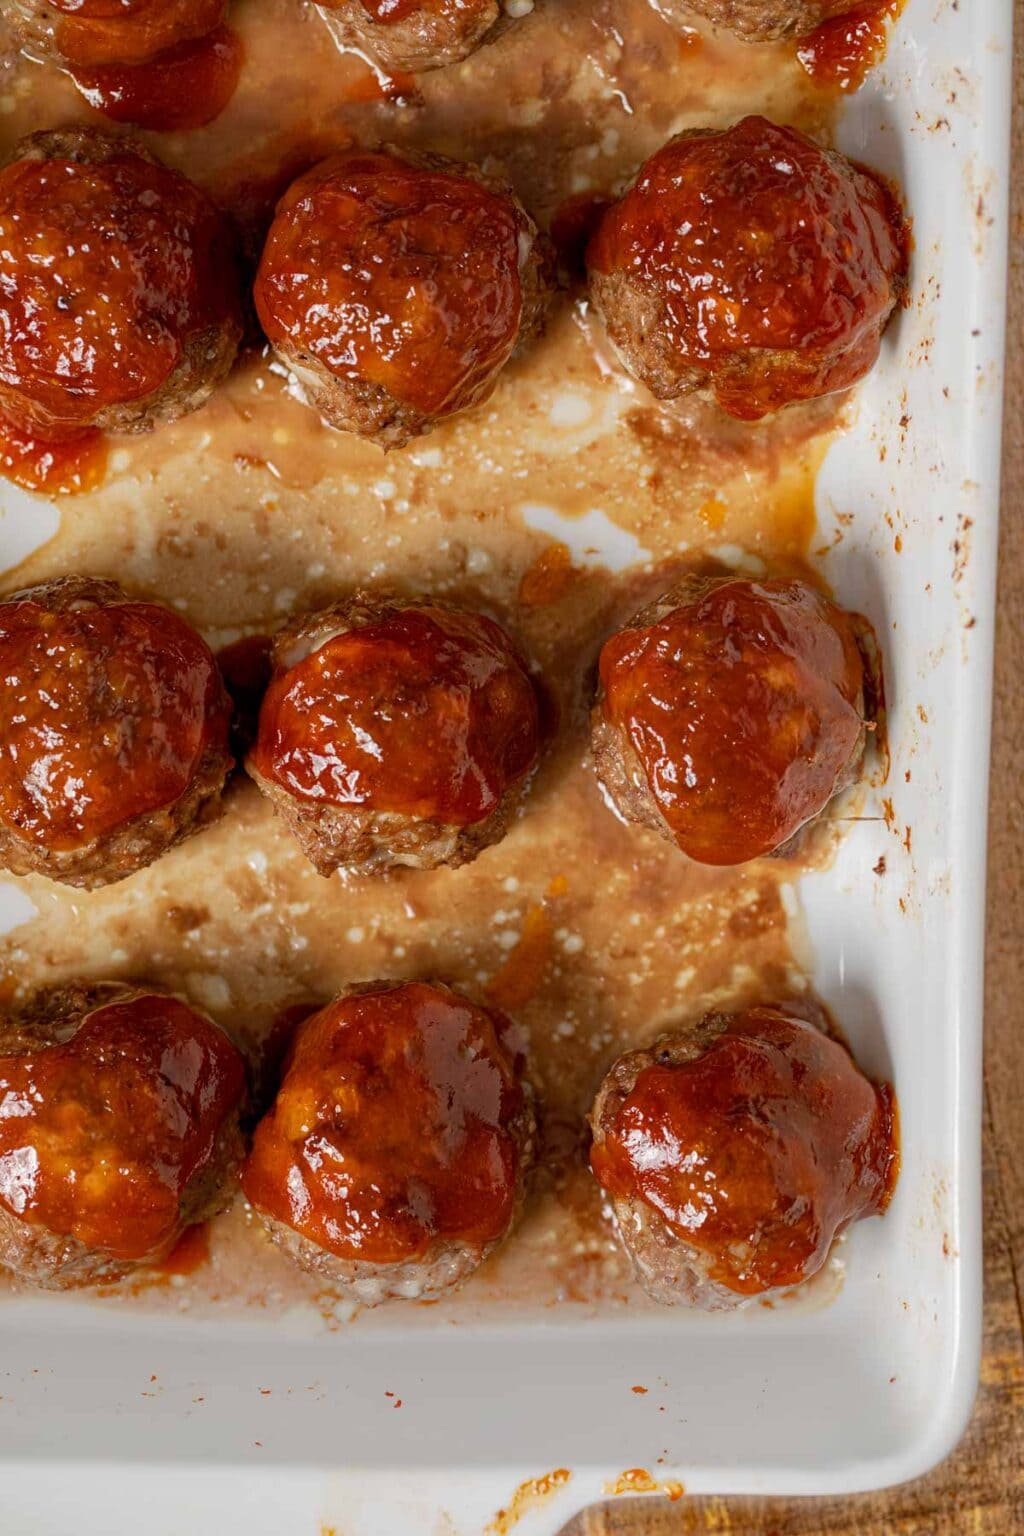 Easy Meatloaf Meatballs Recipe Dinner Then Dessert